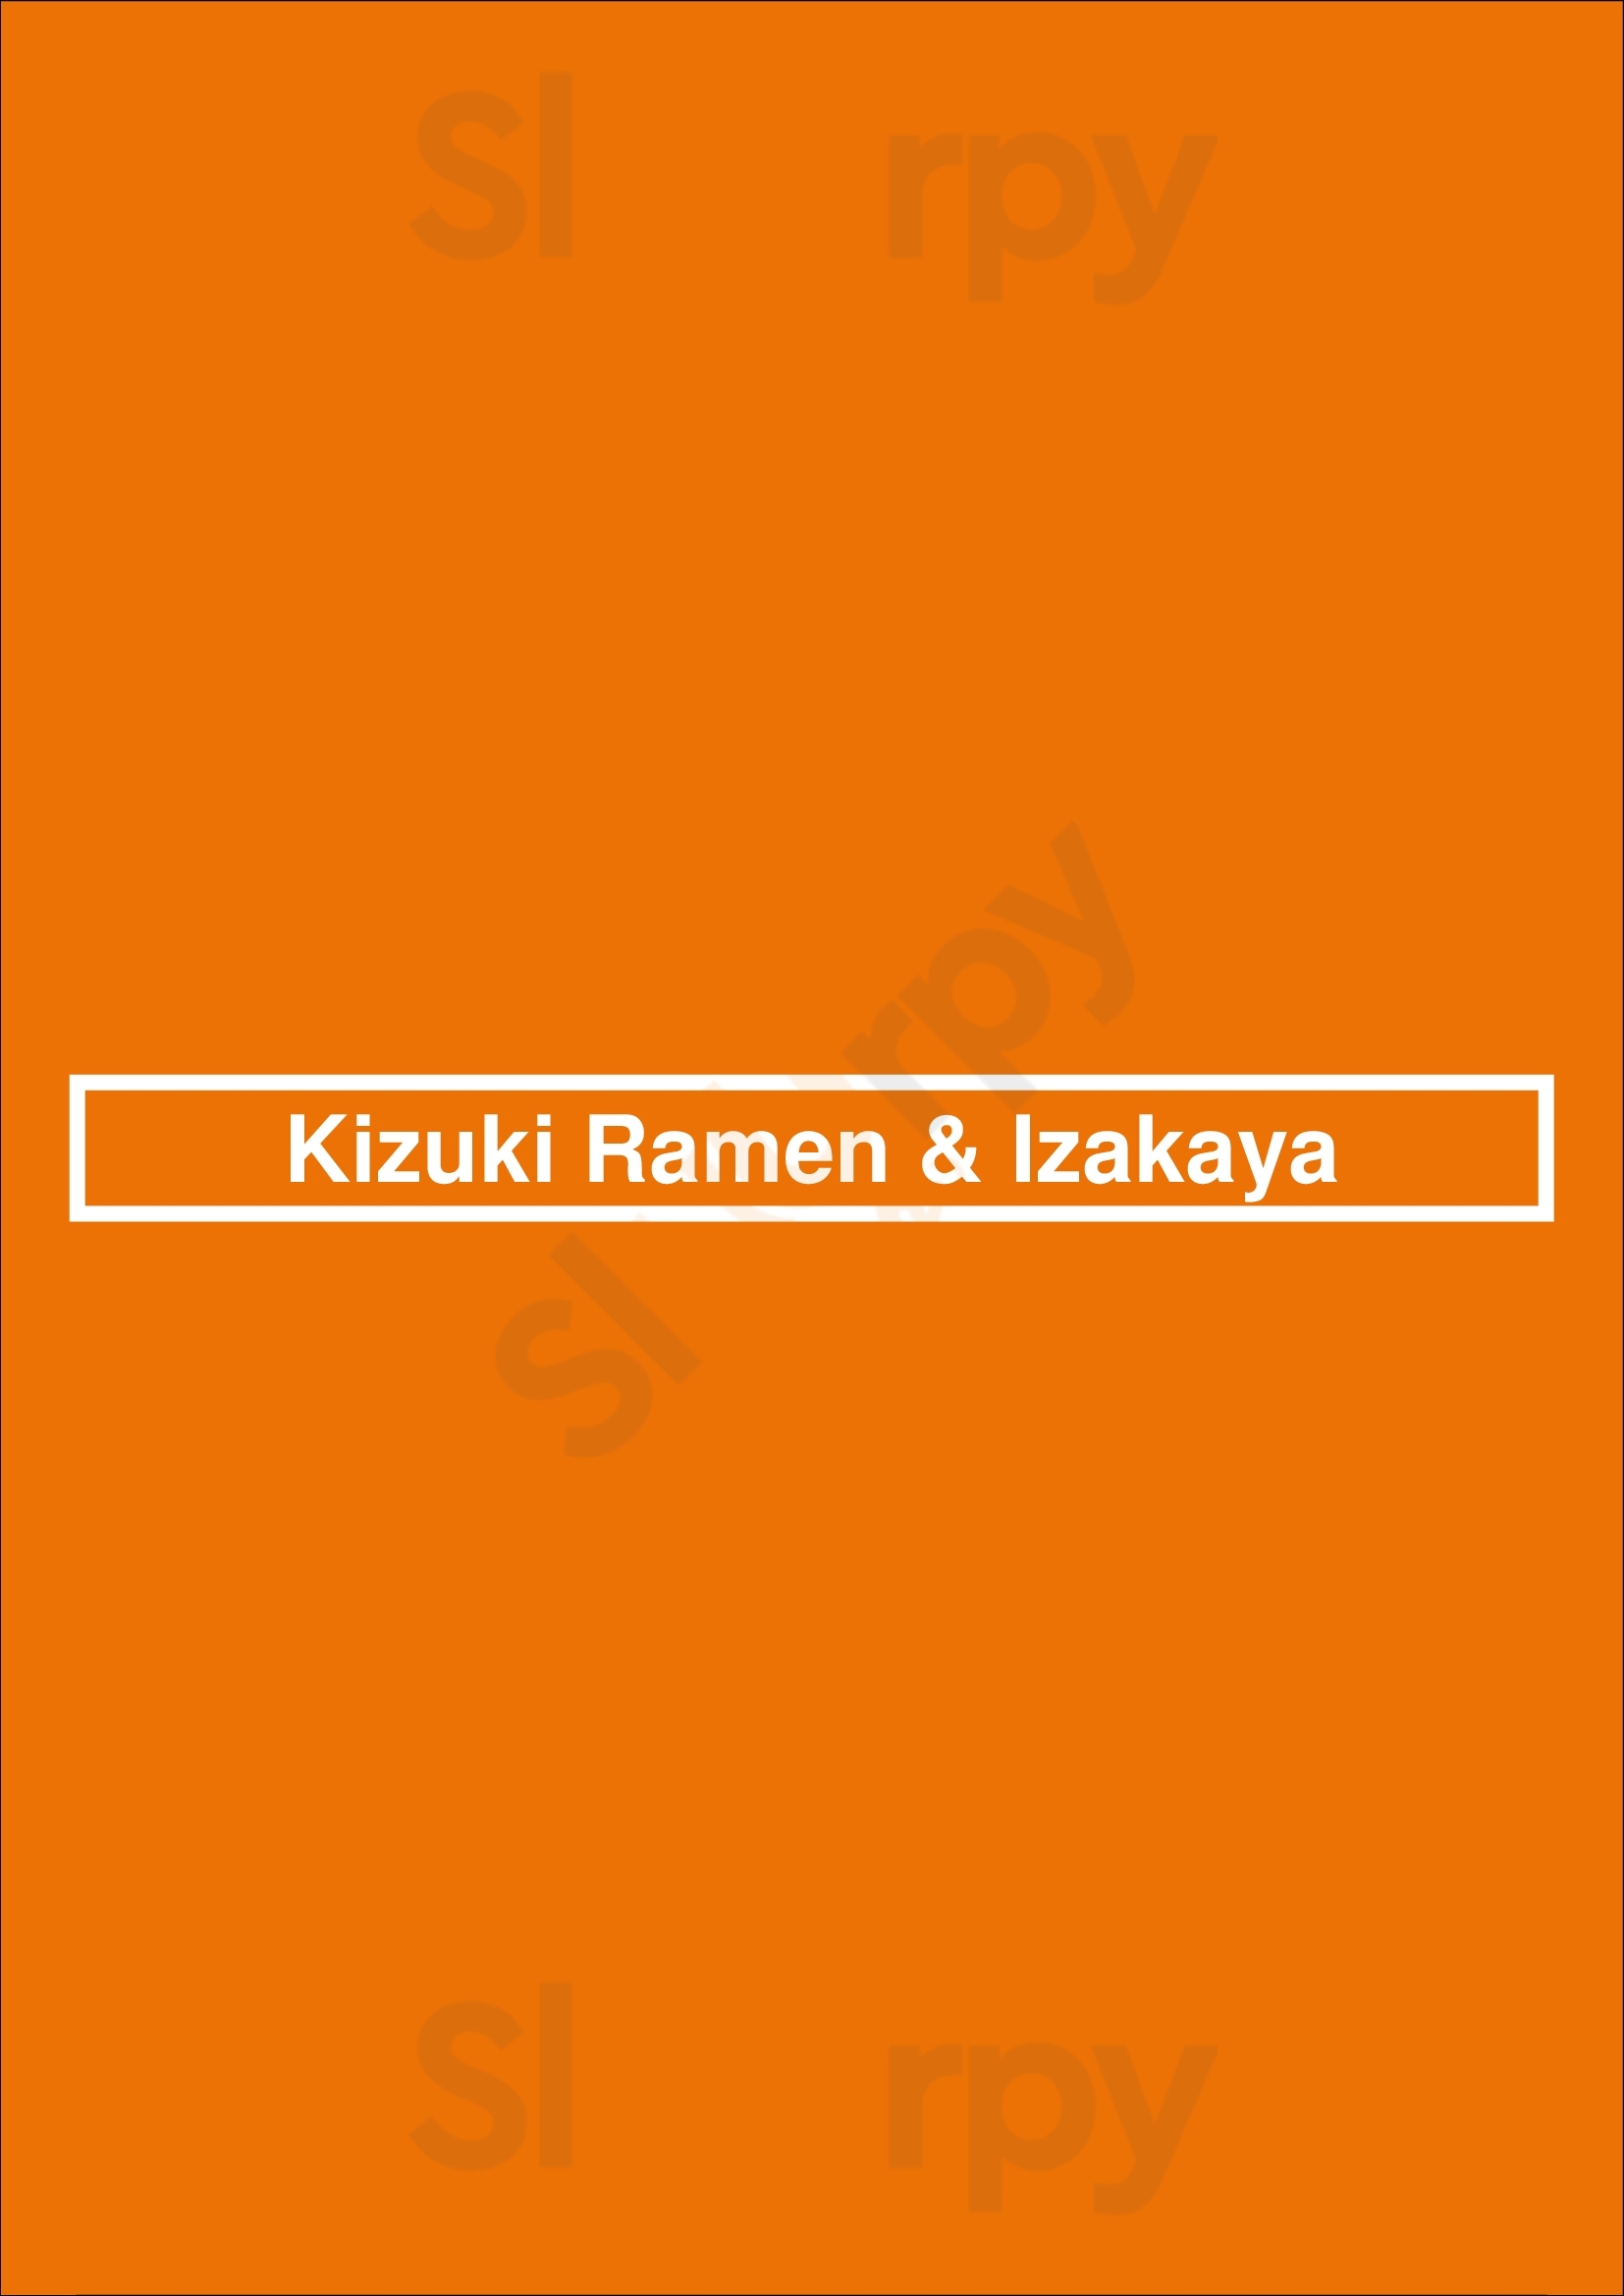 Kizuki Ramen & Izakaya Seattle Menu - 1